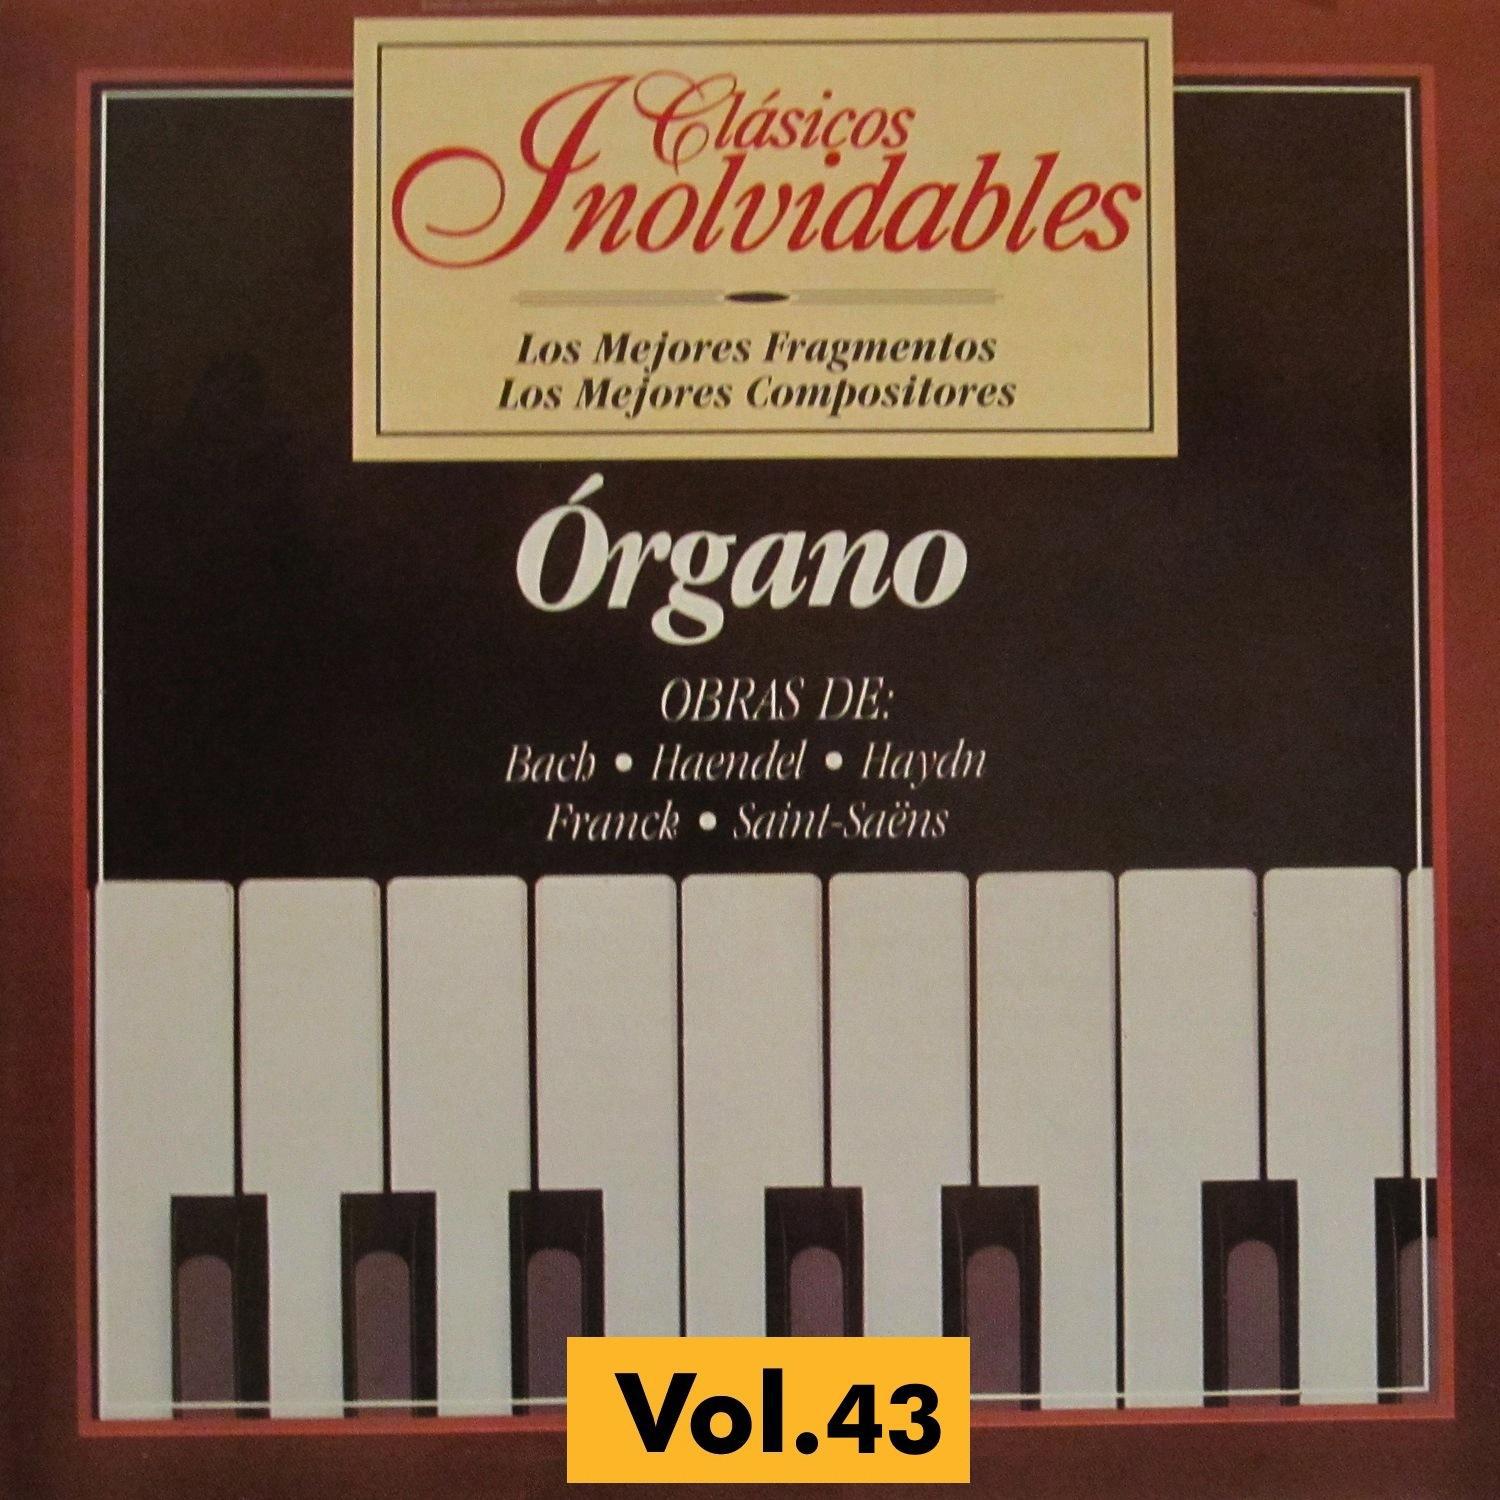 Clásicos Inolvidables Vol. 43, Órgano专辑